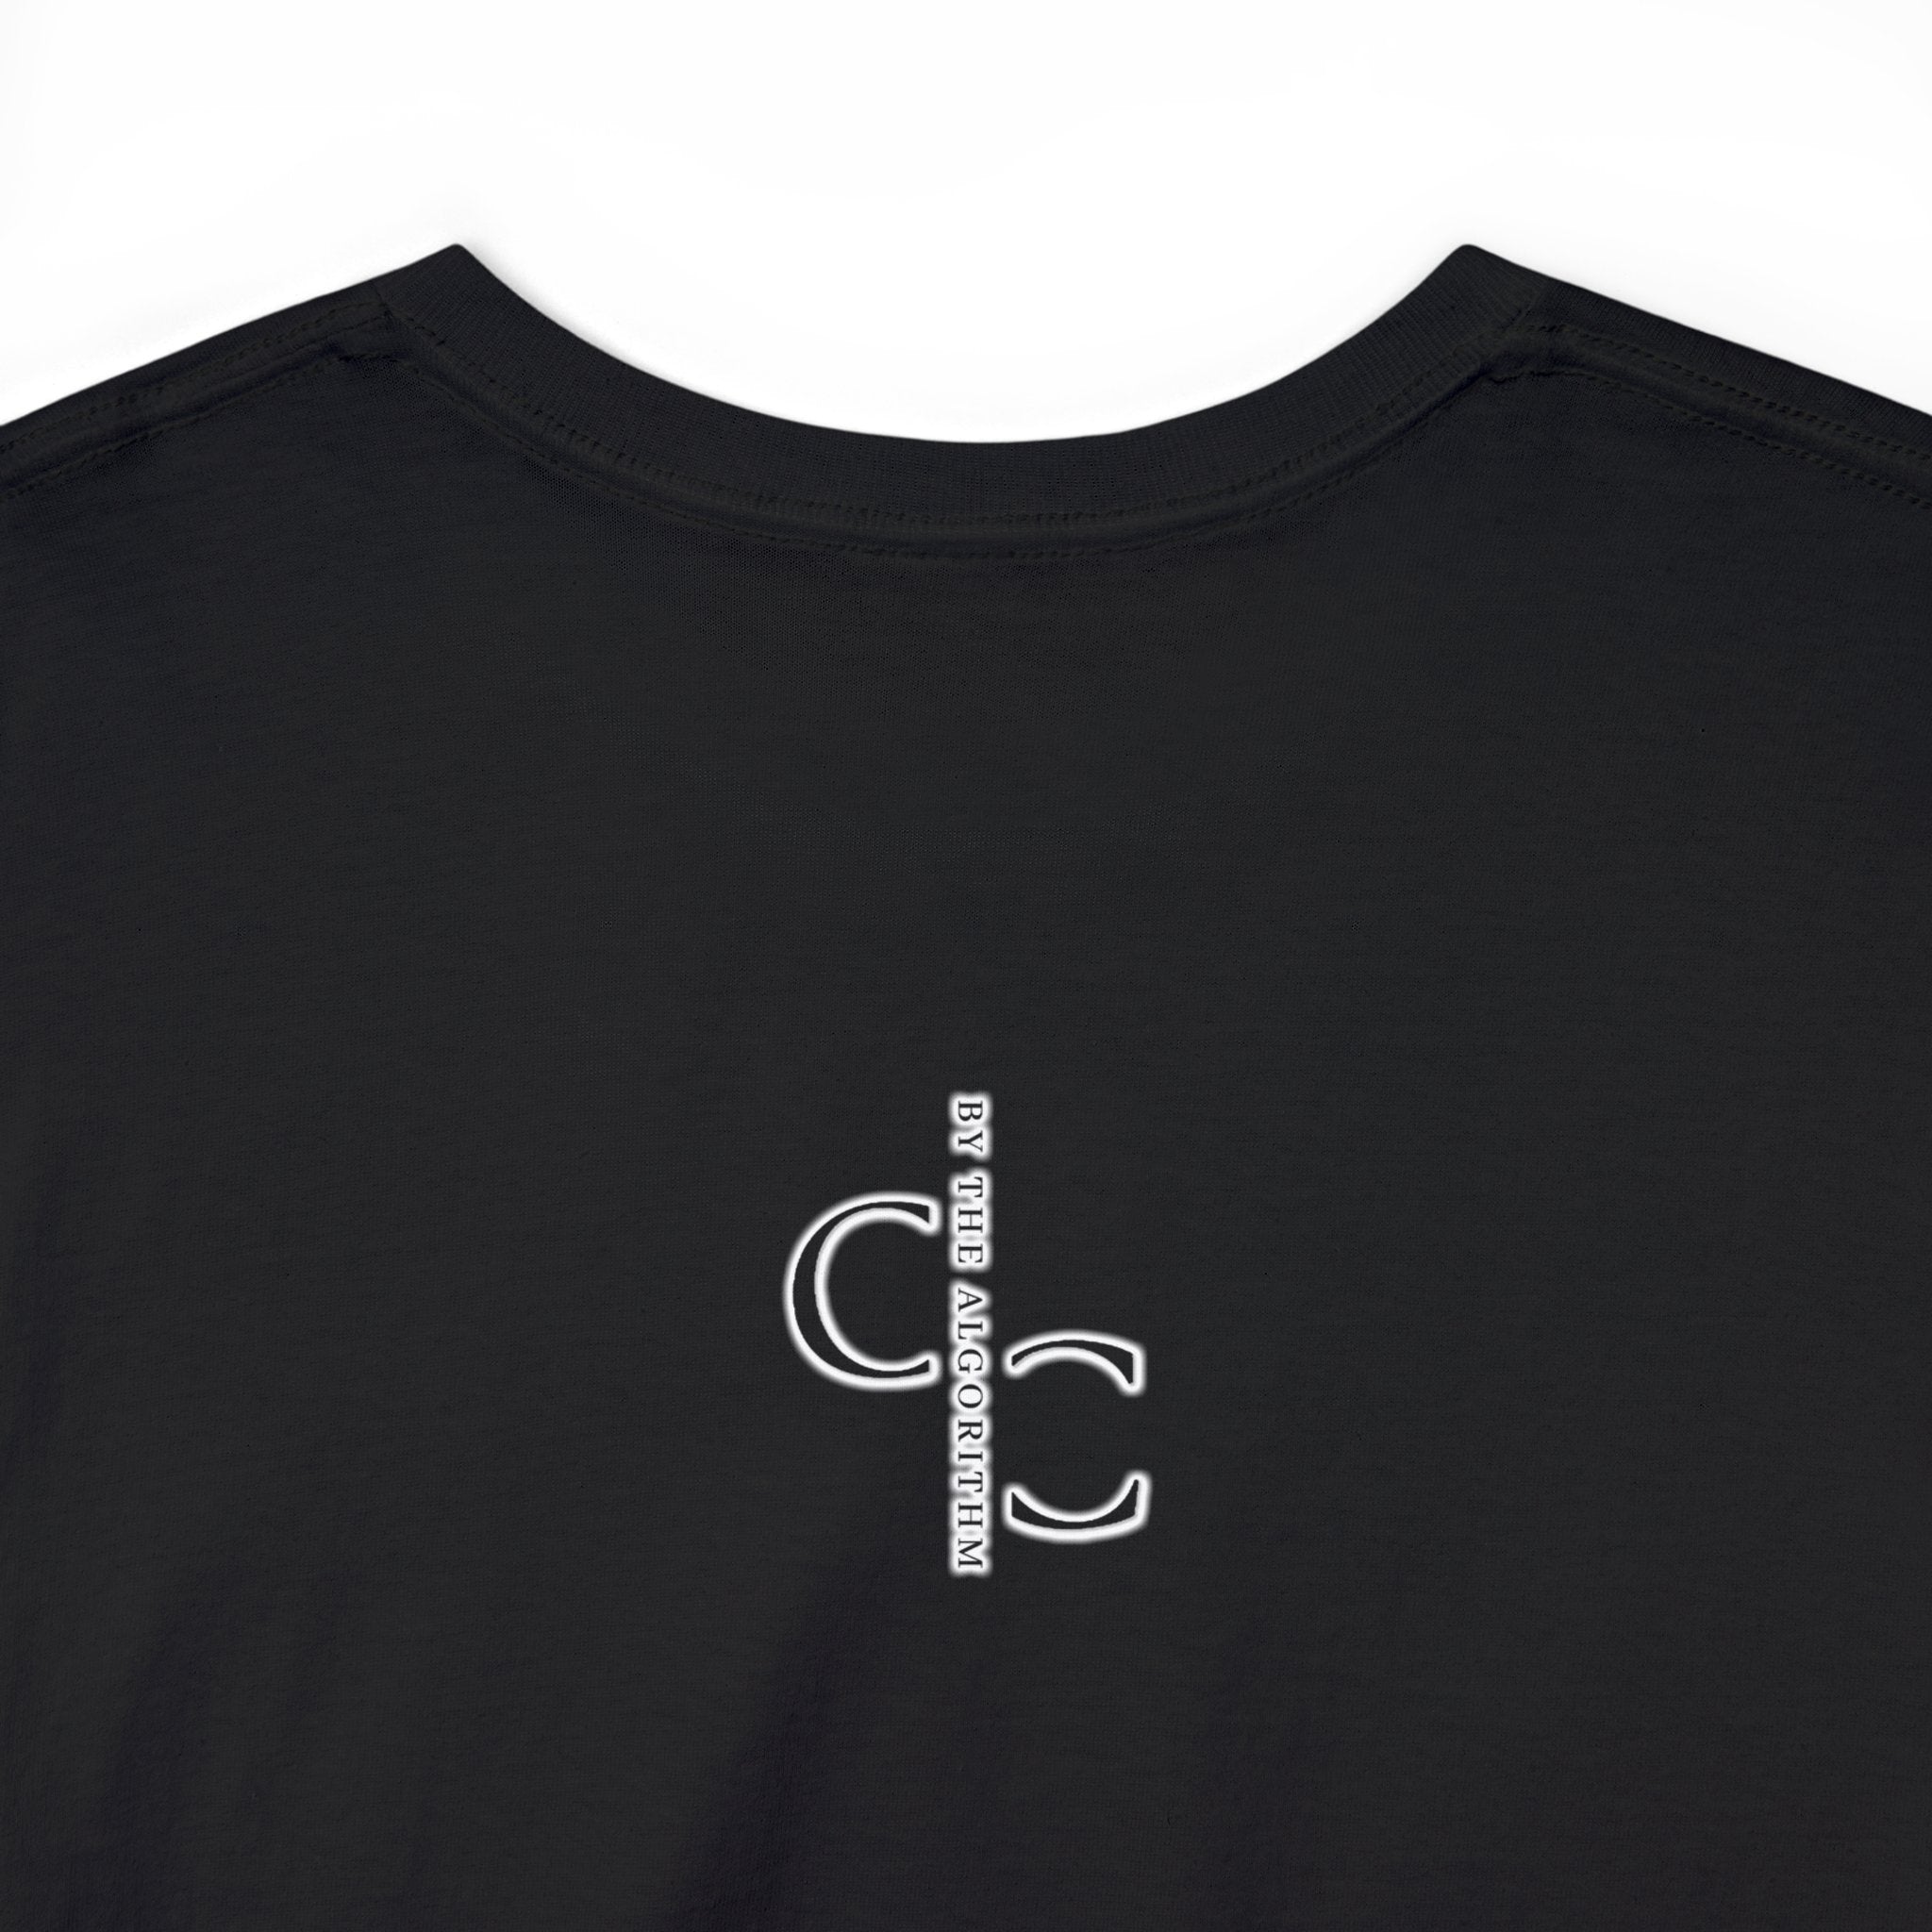 Hootie Leader of Fall Season T-Shirt Design by C&C